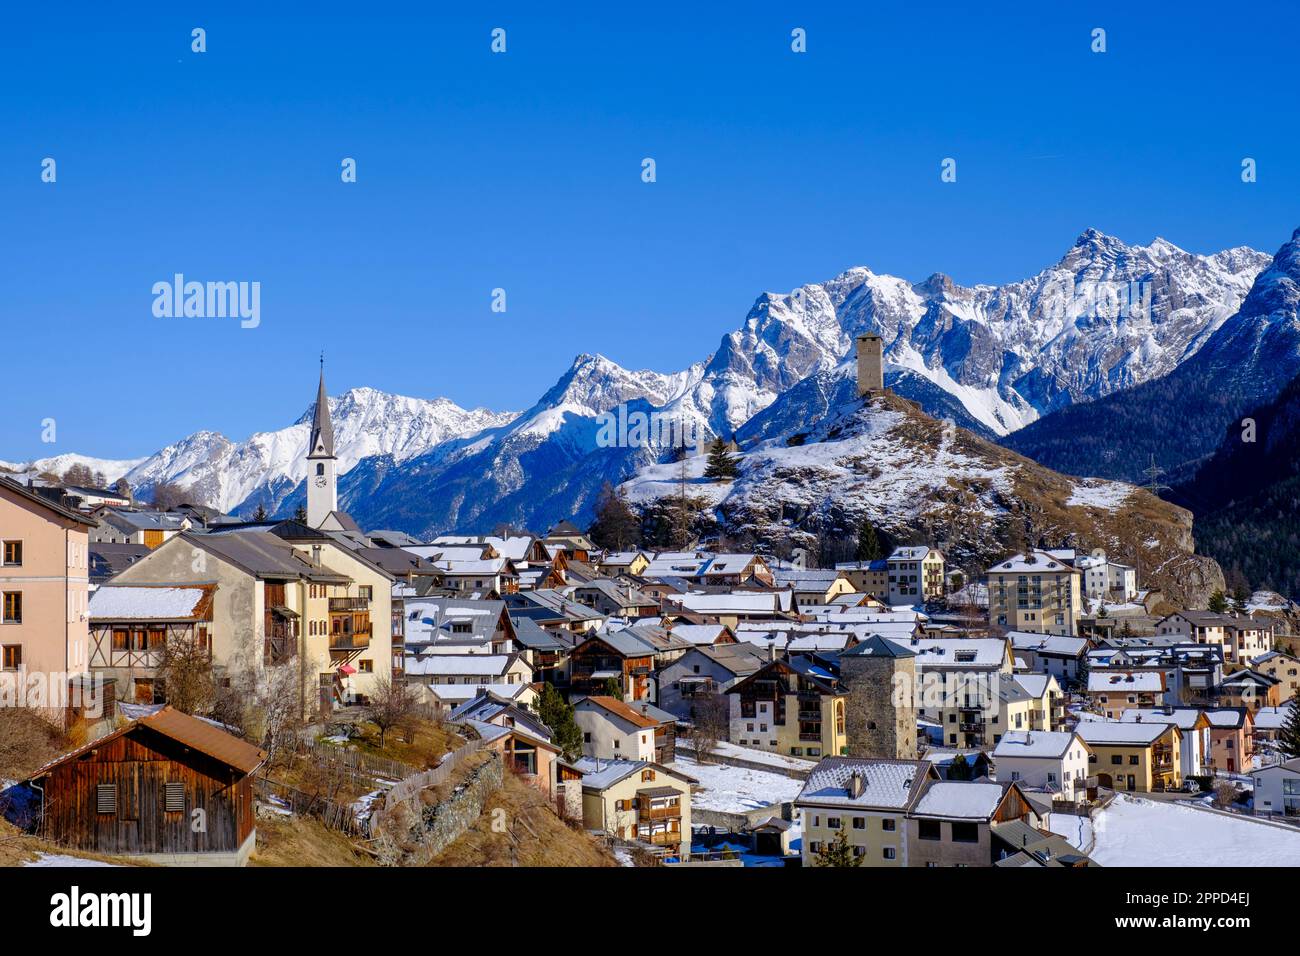 Switzerland, Graubunden Canton, Ardez, View of winter town in Engadine valley with mountains in background Stock Photo